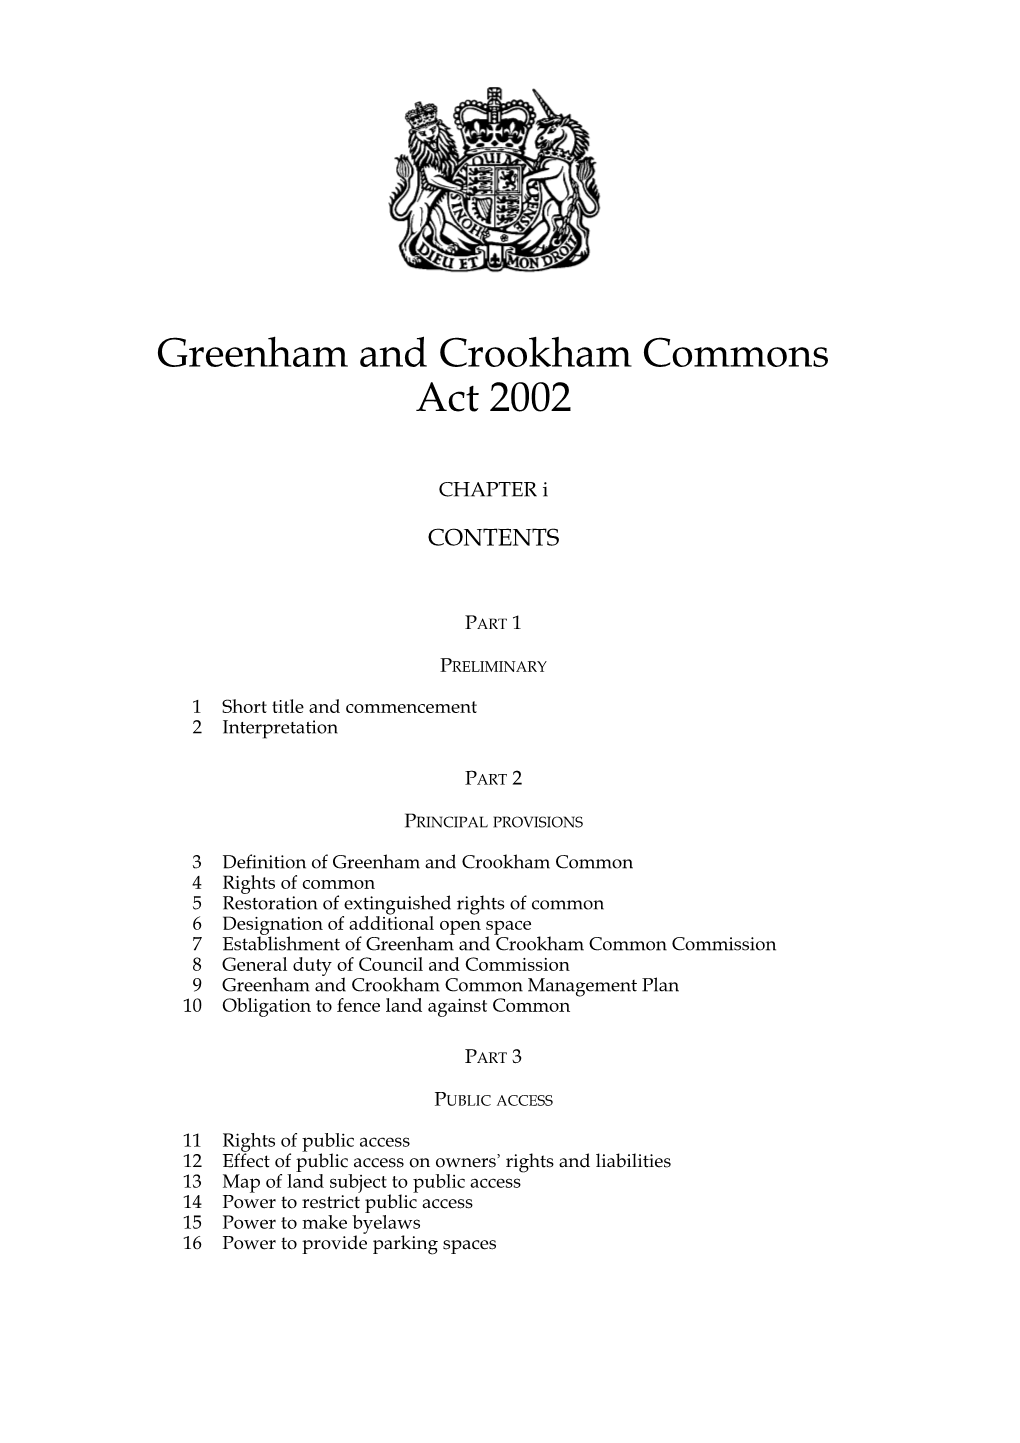 Greenham and Crookham Commons Act 2002